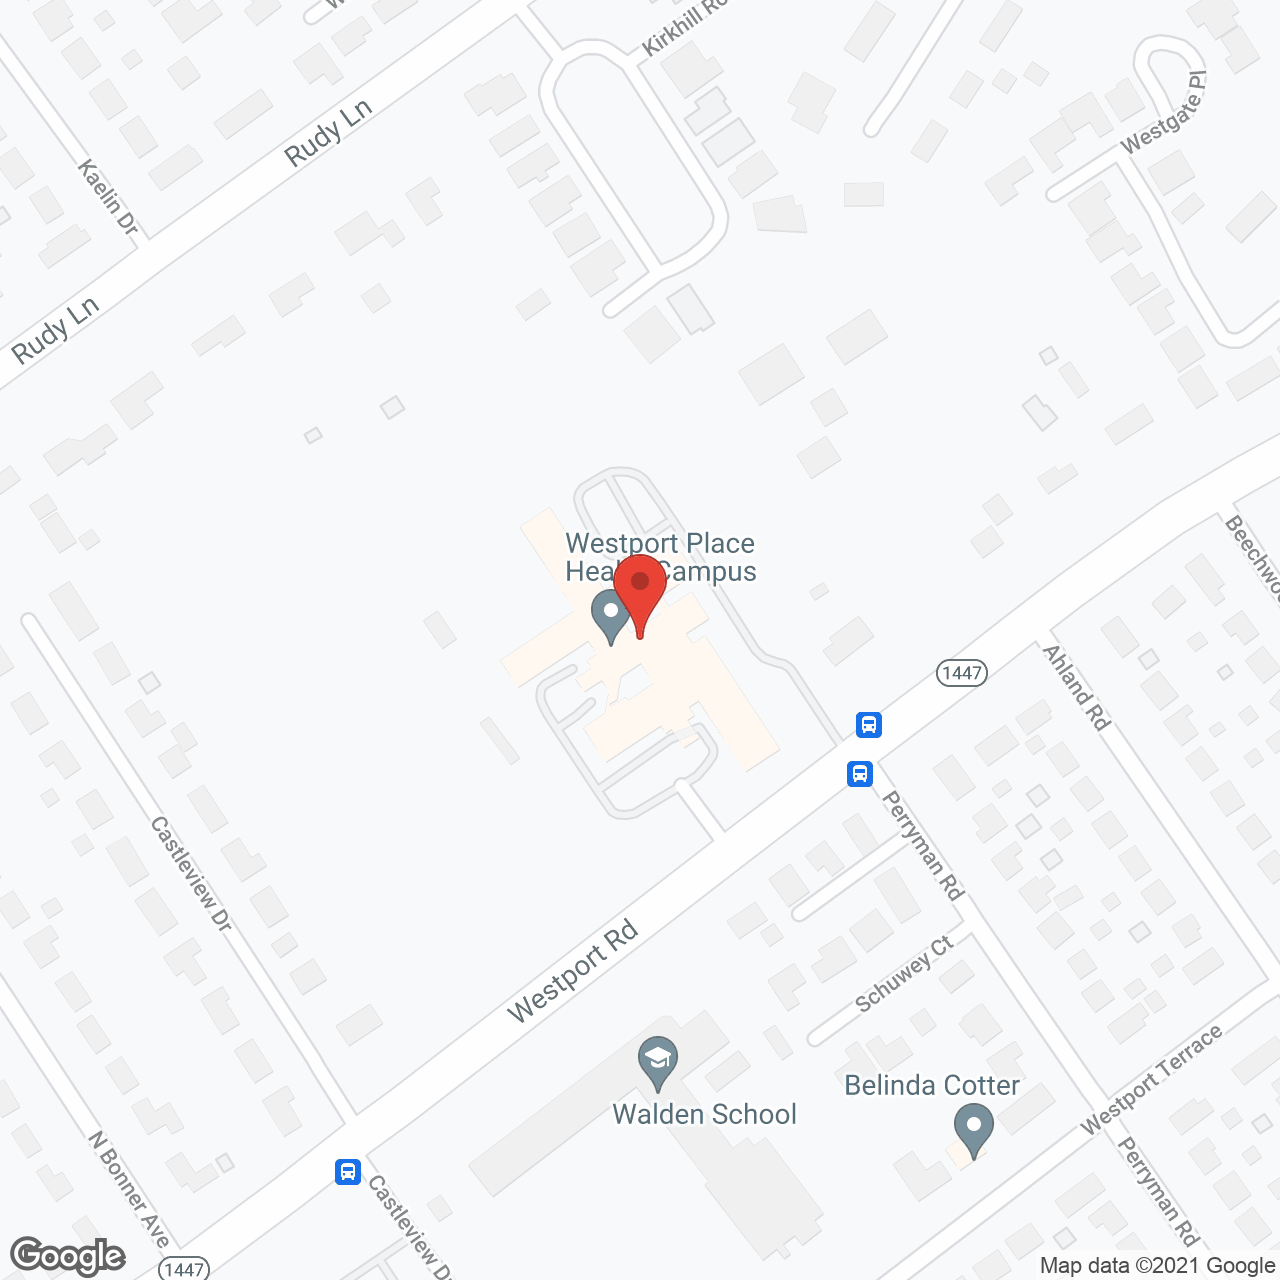 Westport Place Health Campus in google map